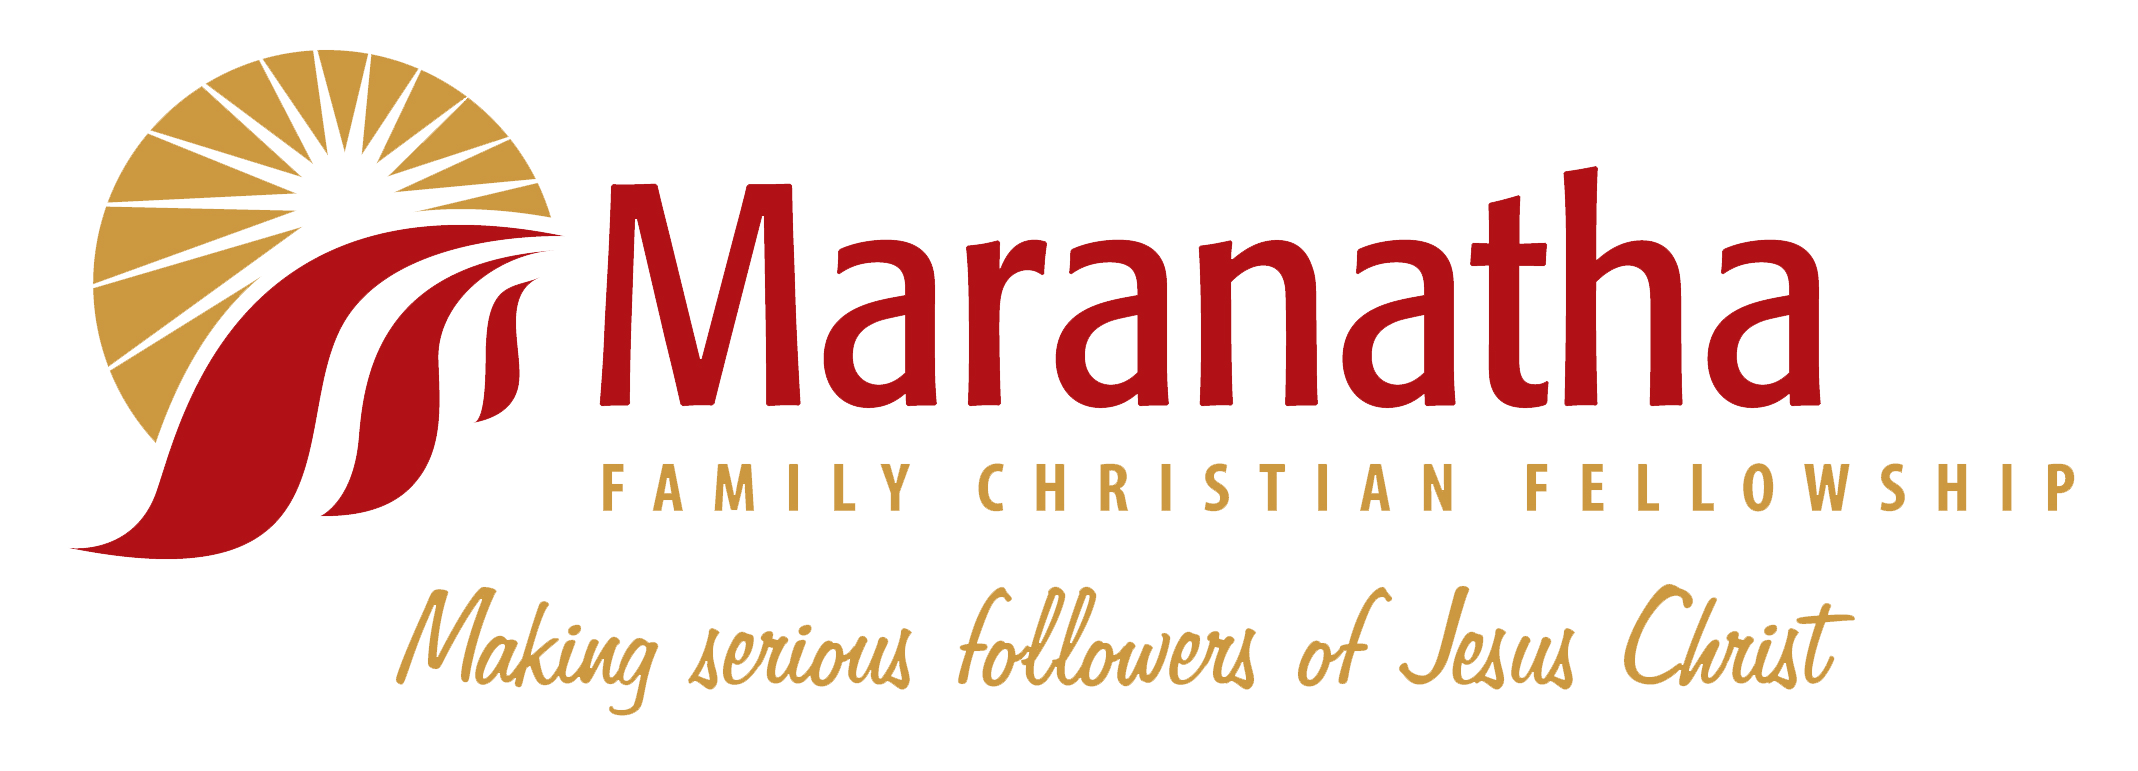 Maranatha Family Christian Fellowship